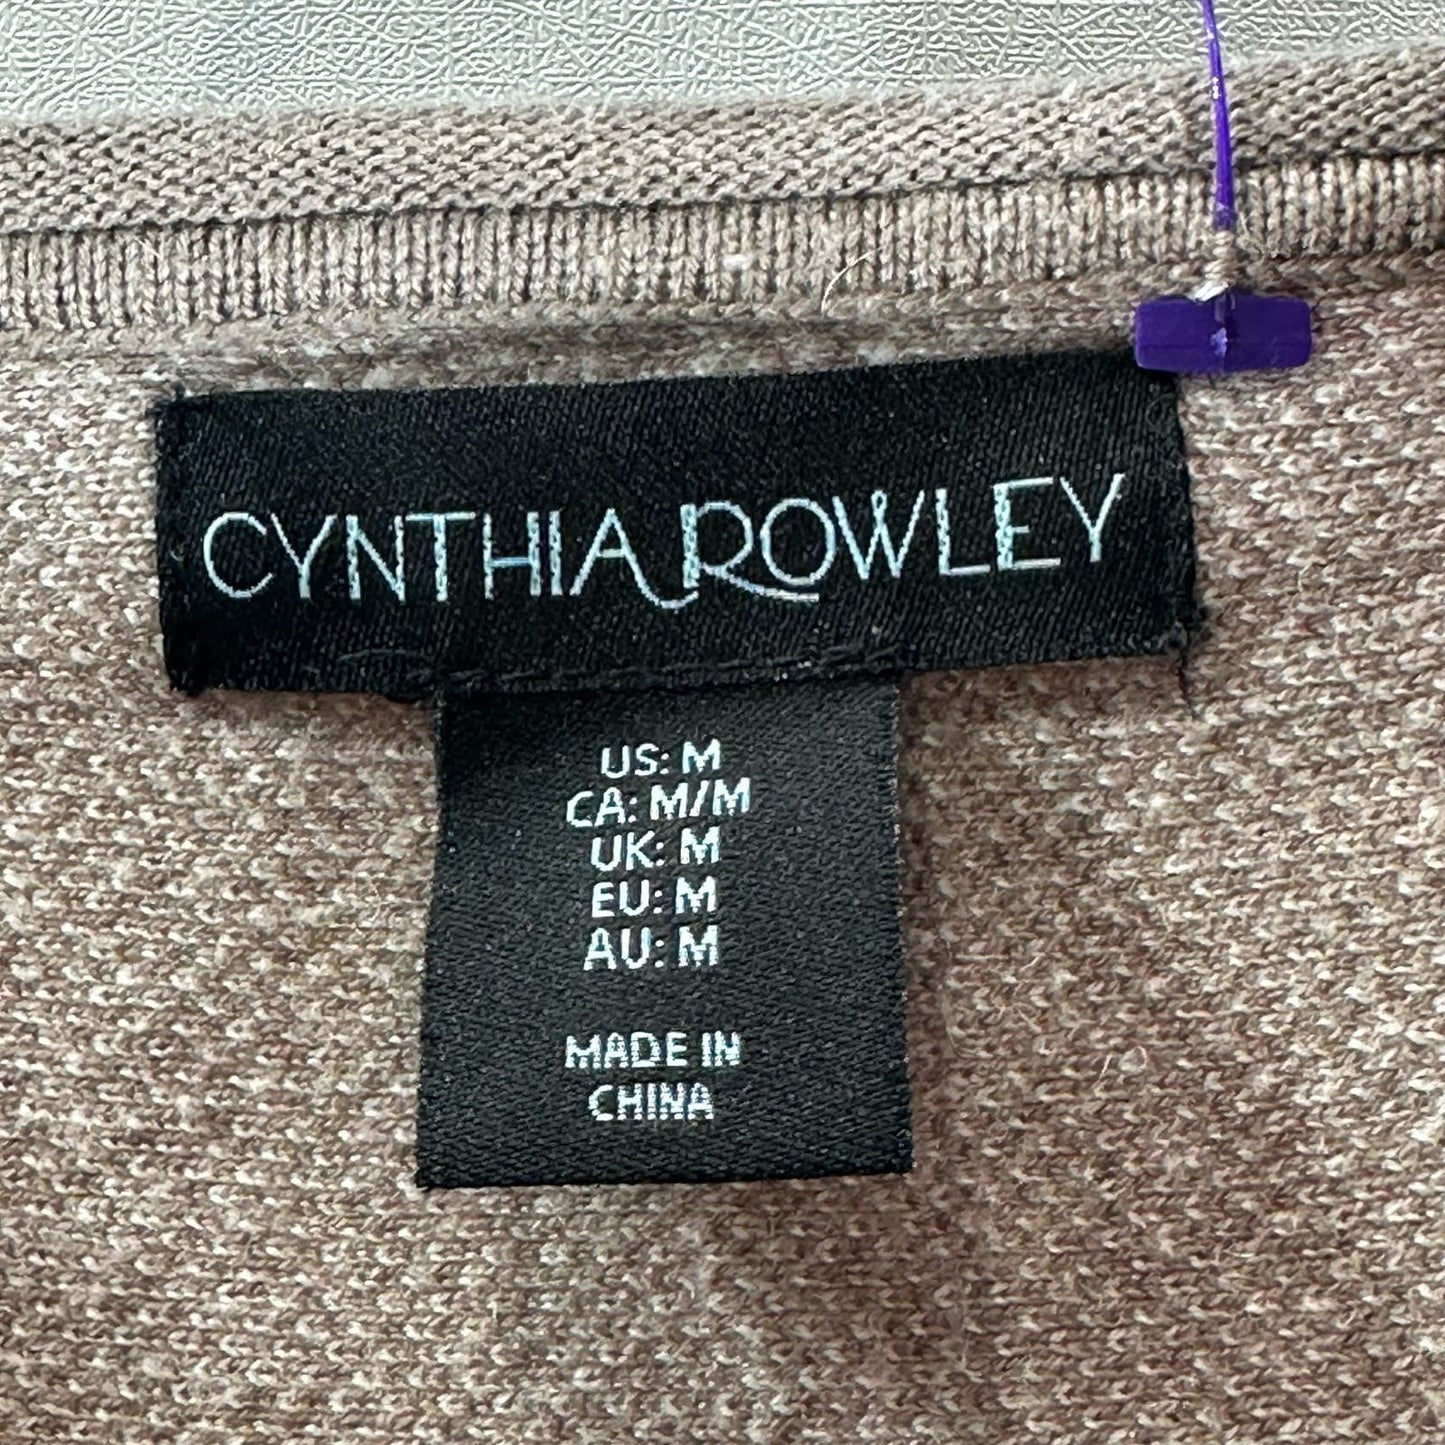 CYNTHIA ROWLEY Women's Brown/Beige Plaid Bateau Pullover Sweater SZ M